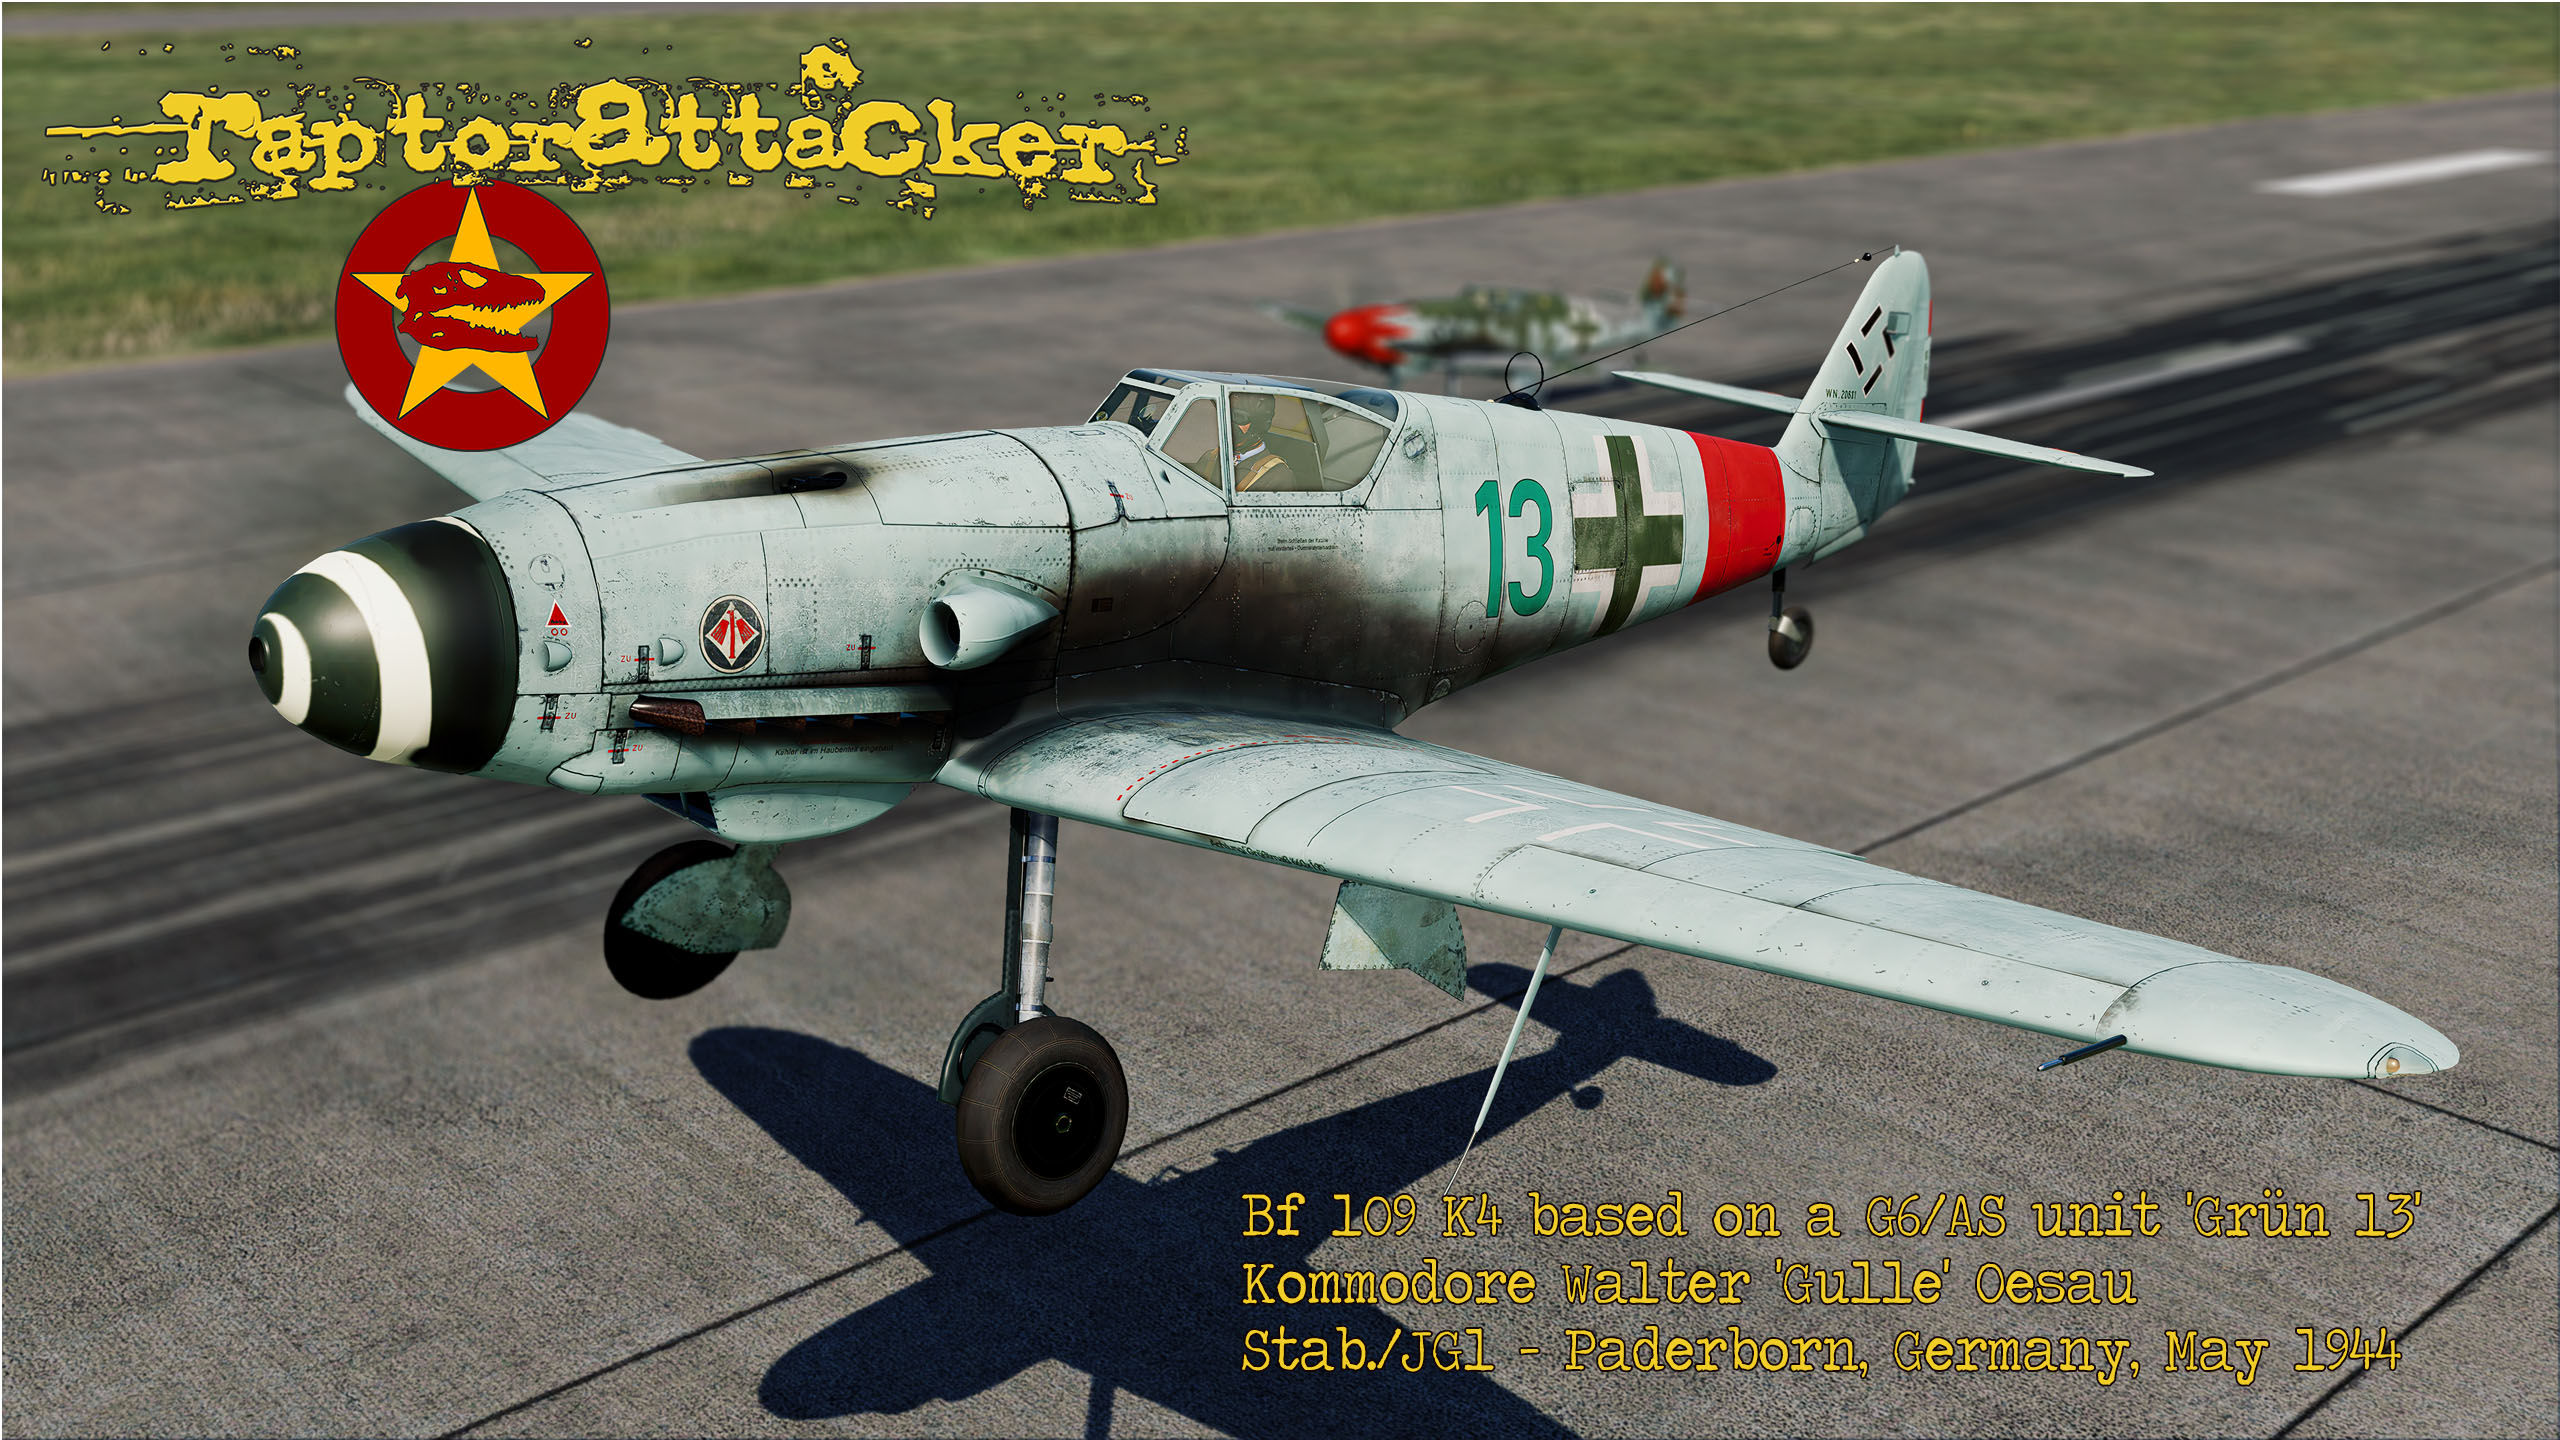 Bf 109 K4-Based on G6/AS 'Grun 13' Walter Oesau May 1944